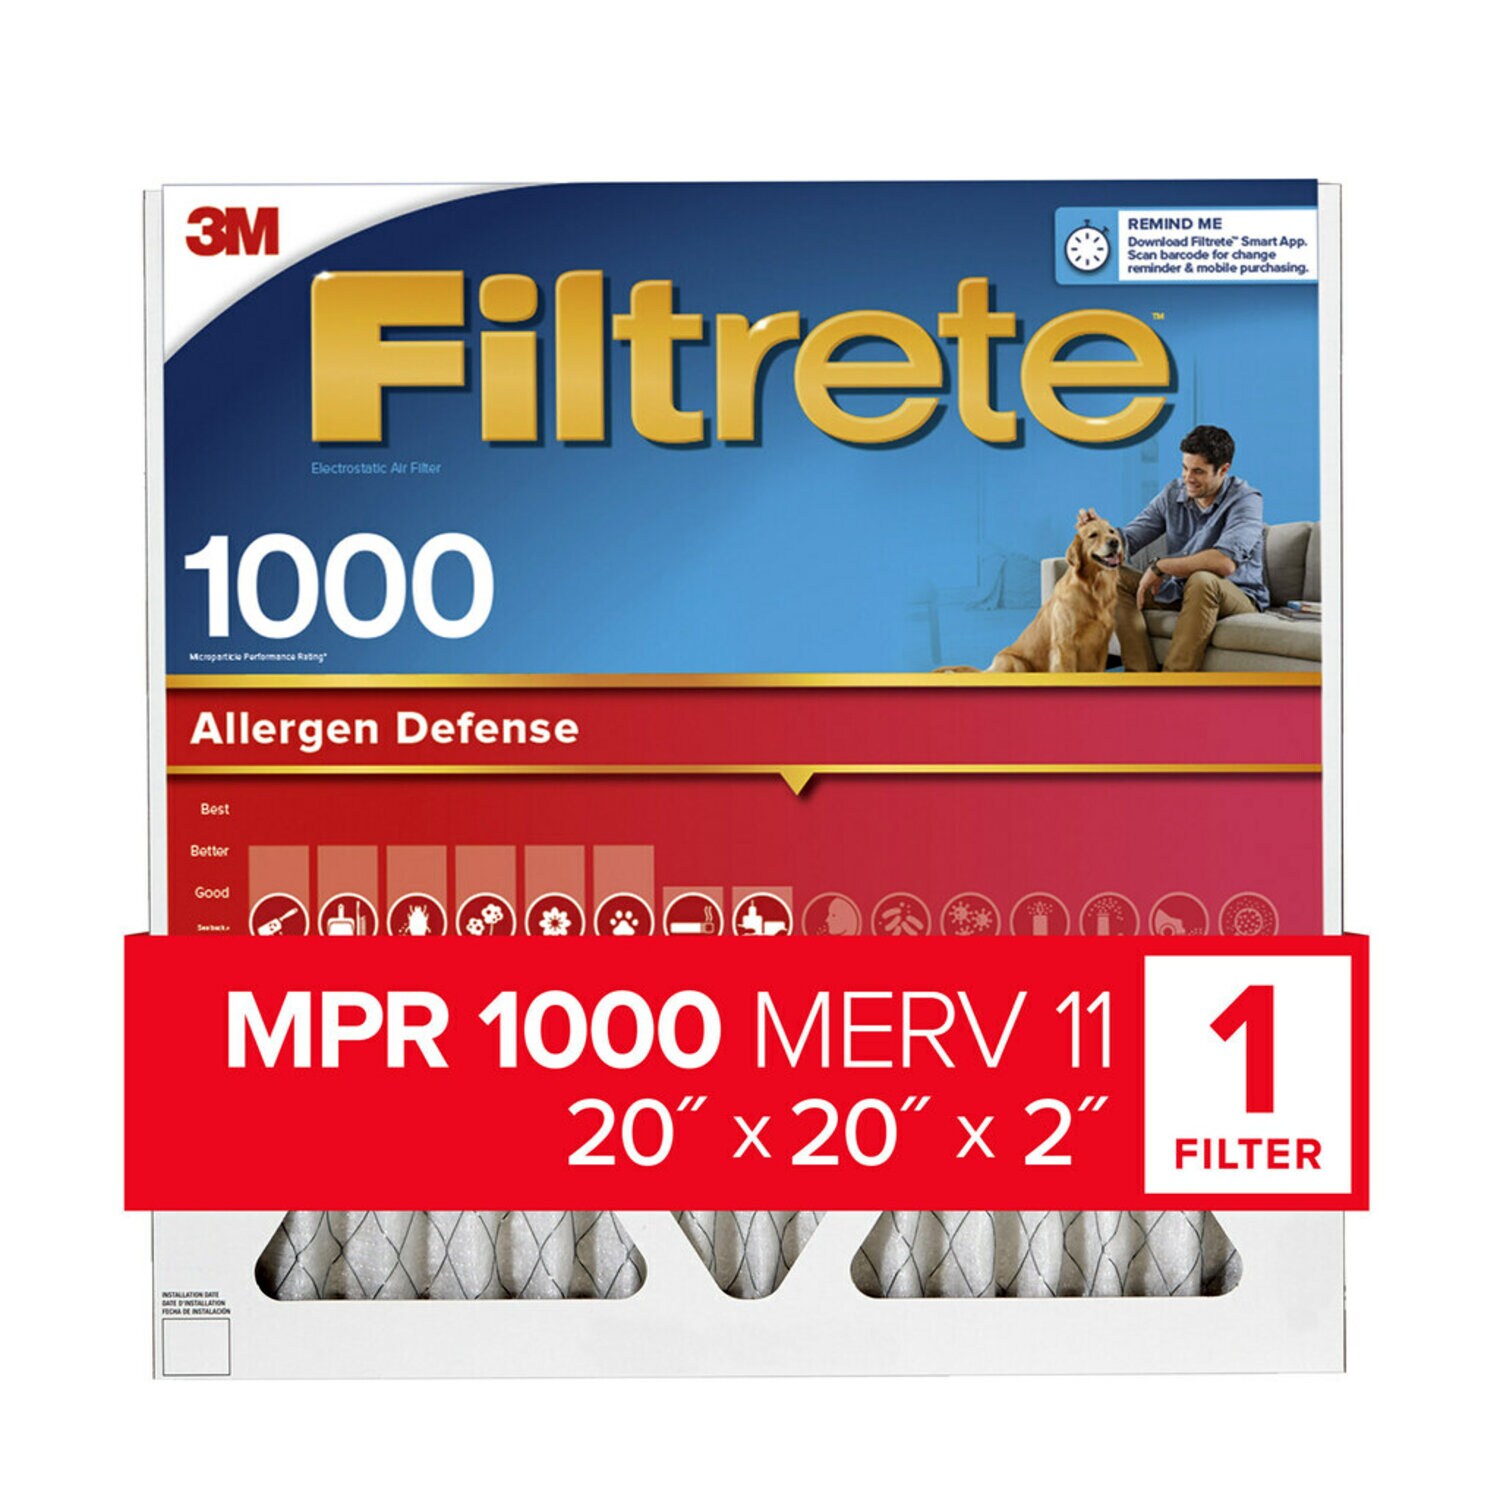 7100269512 - Filtrete Electrostatic Air Filter 1000 MPR NADP02-2IN-4, 20 in x 20 in x 2 in (50.8 cm x 50.8 cm x 5 cm)